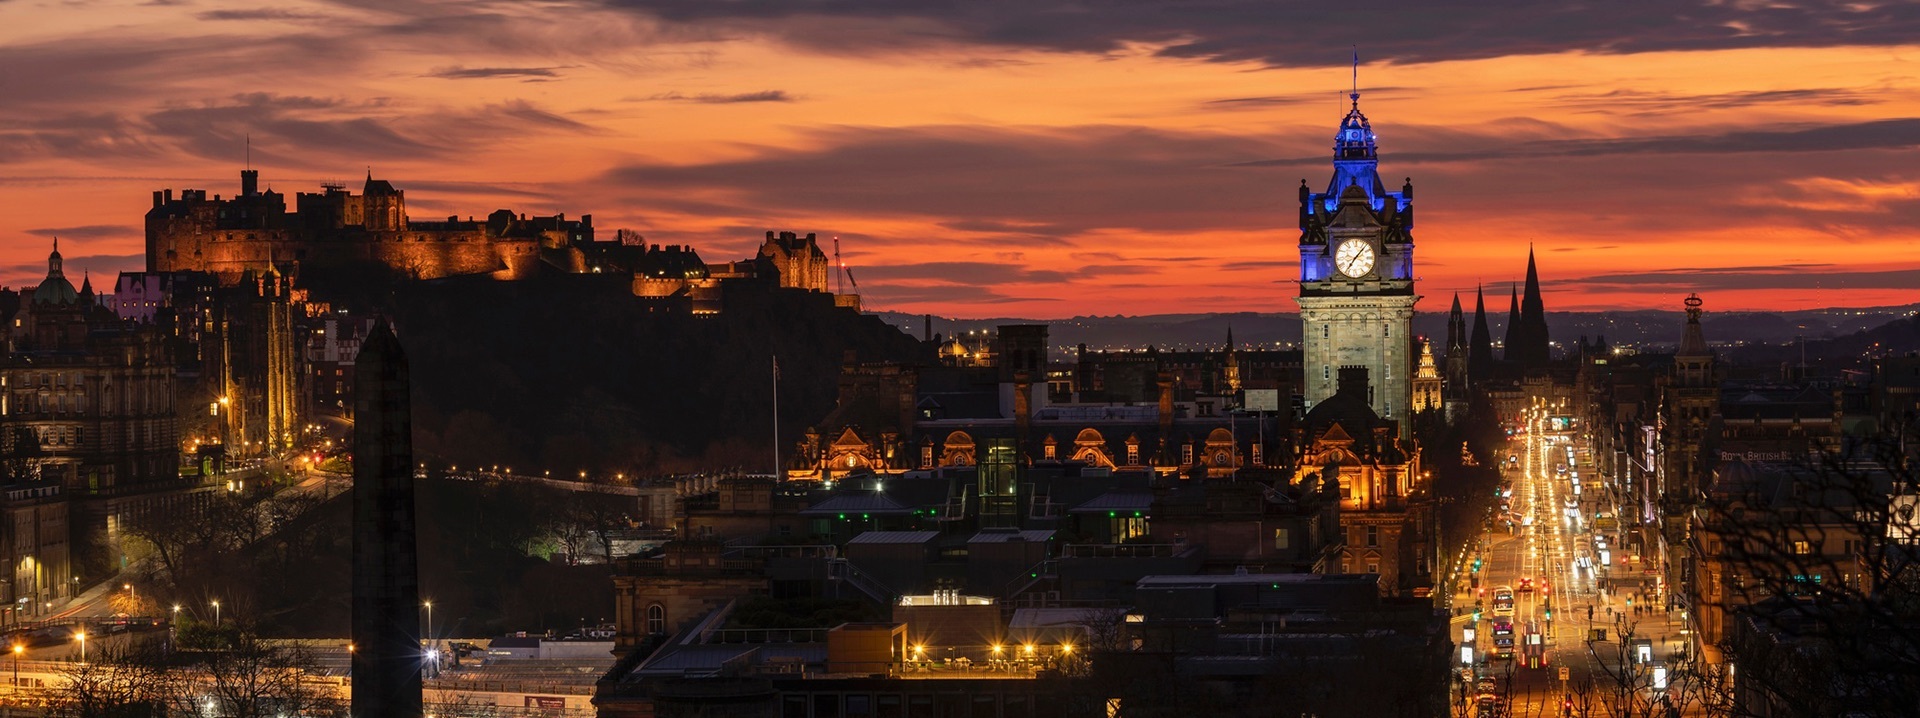 A panoramic view of Edinburgh at night, Princes Street, the Balmoral Hotel, Edinburgh Castle and buildings